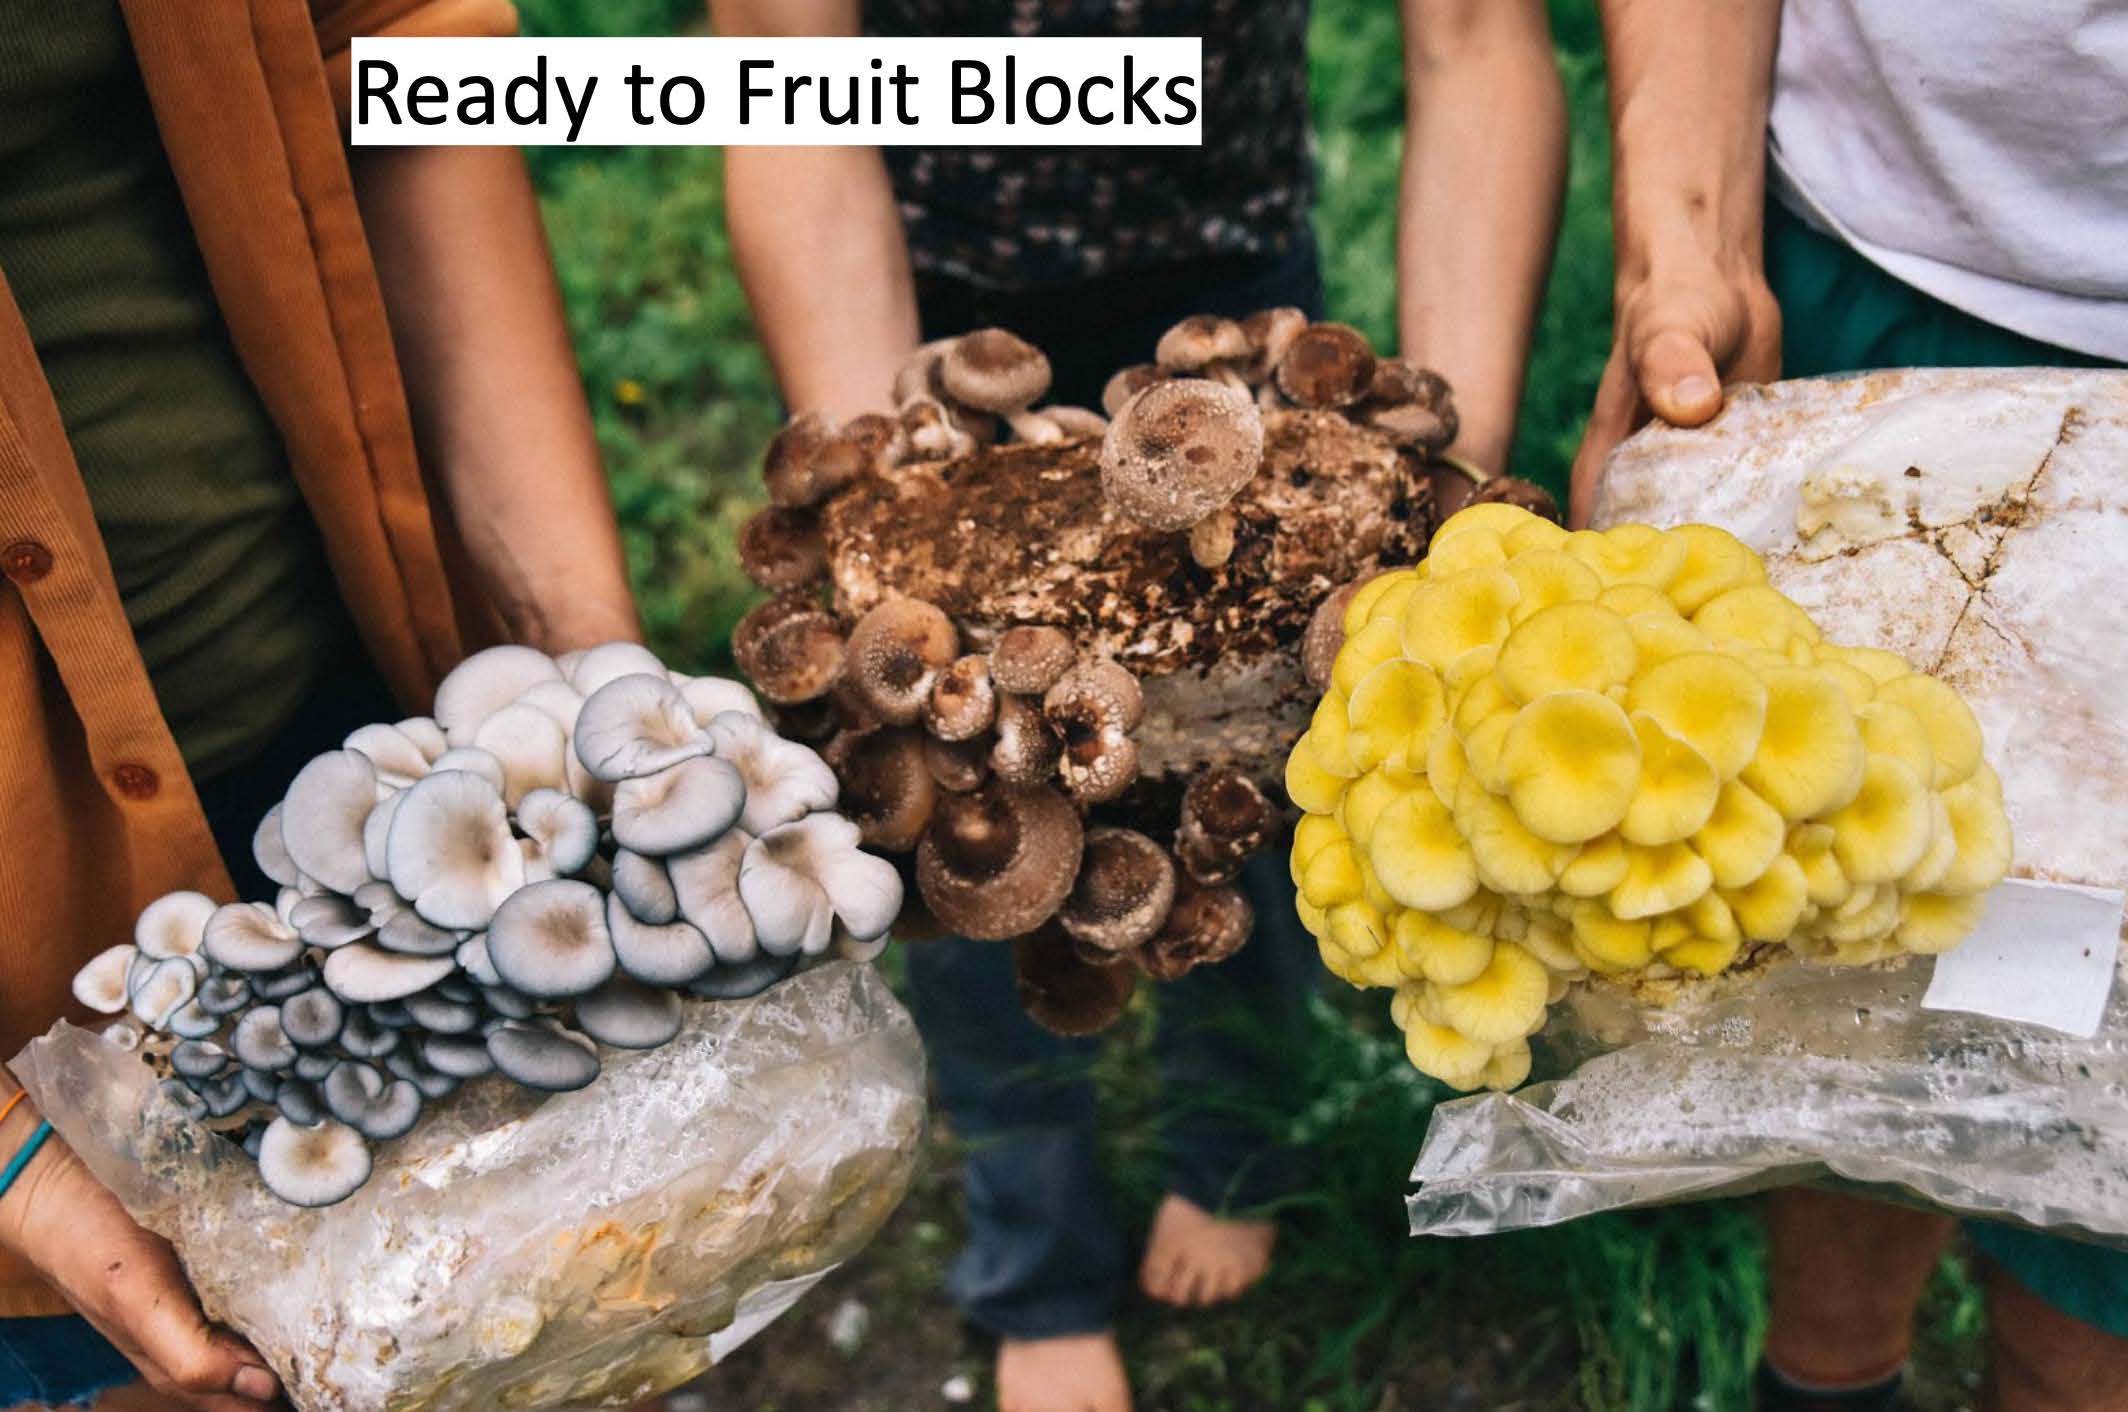 Ready to fruit blocks